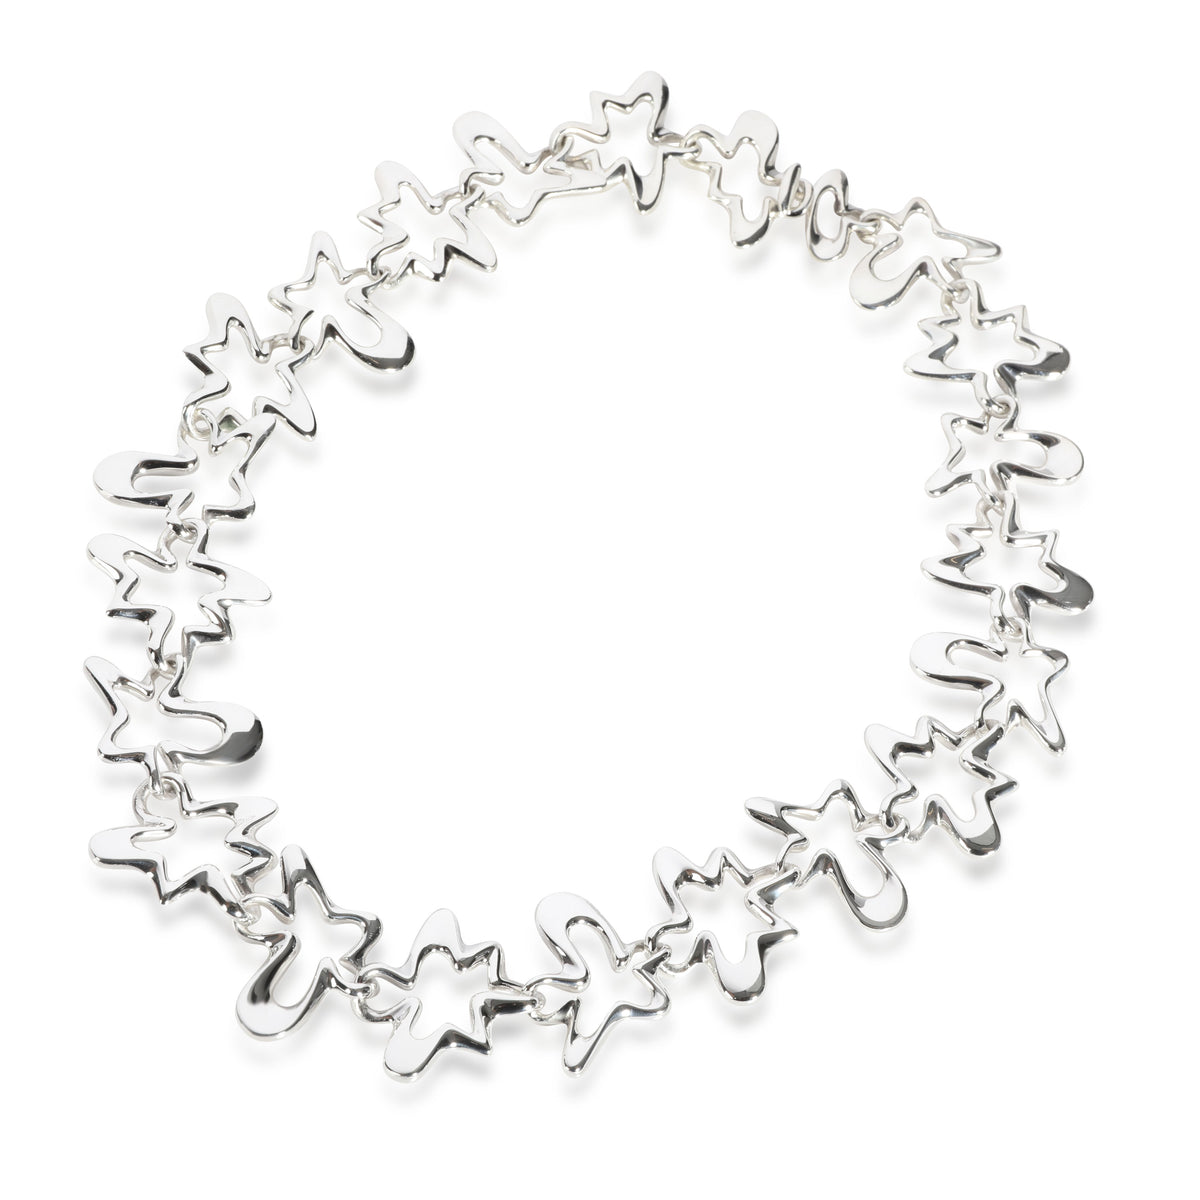 Georg Jensen Splash Necklace in  Sterling Silver